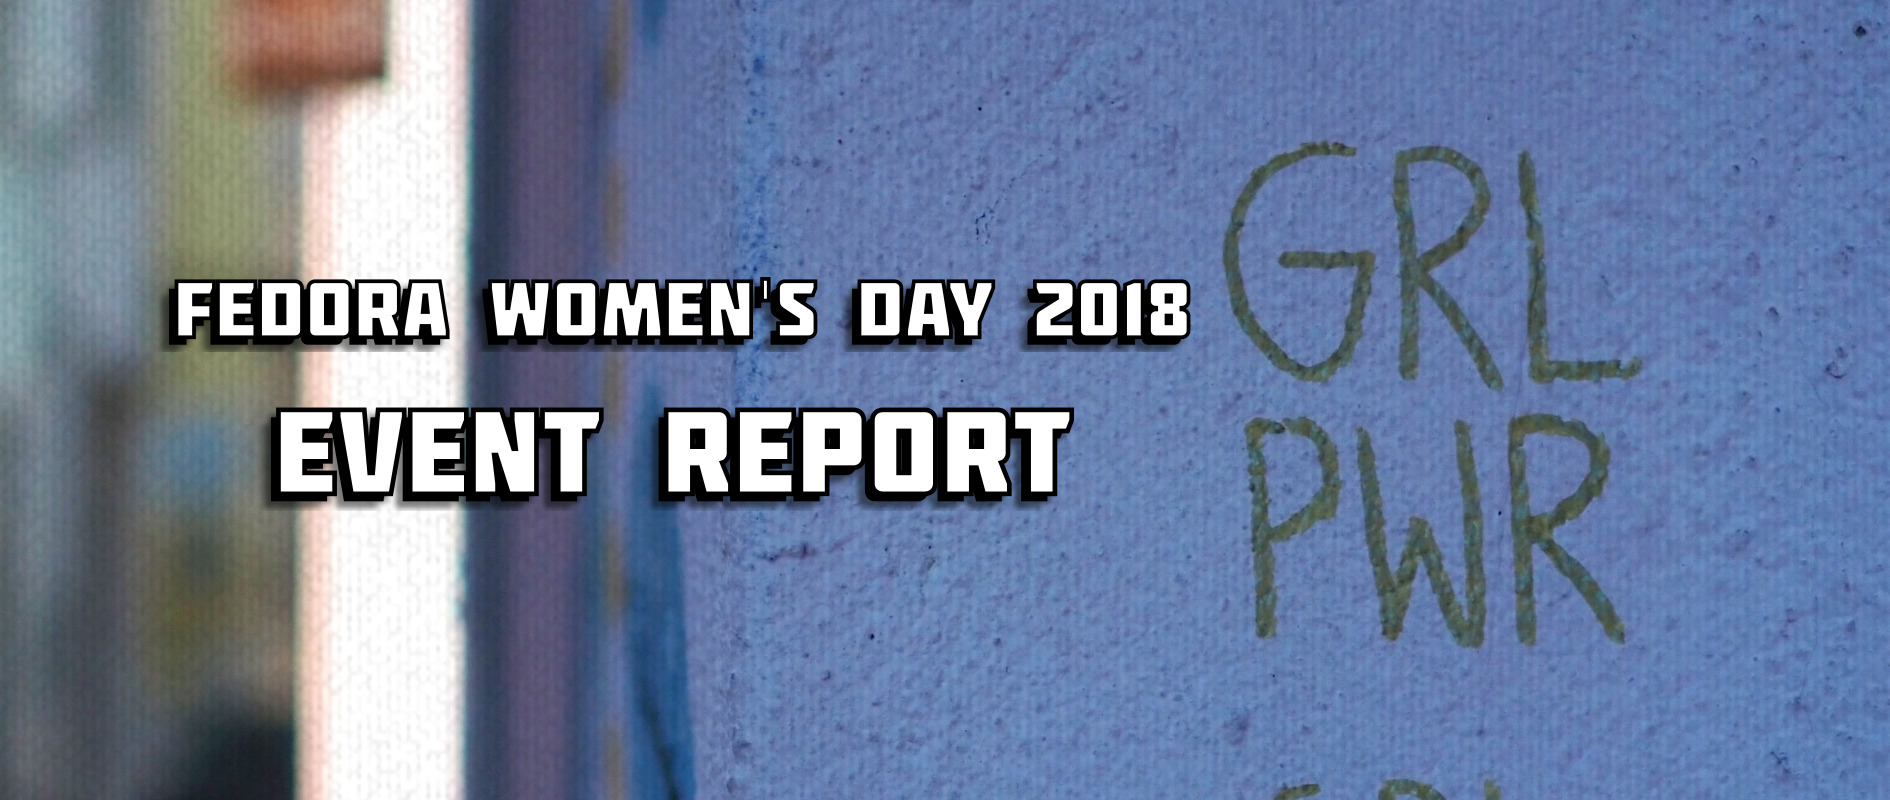 Fedora Women's Day 2018 event report